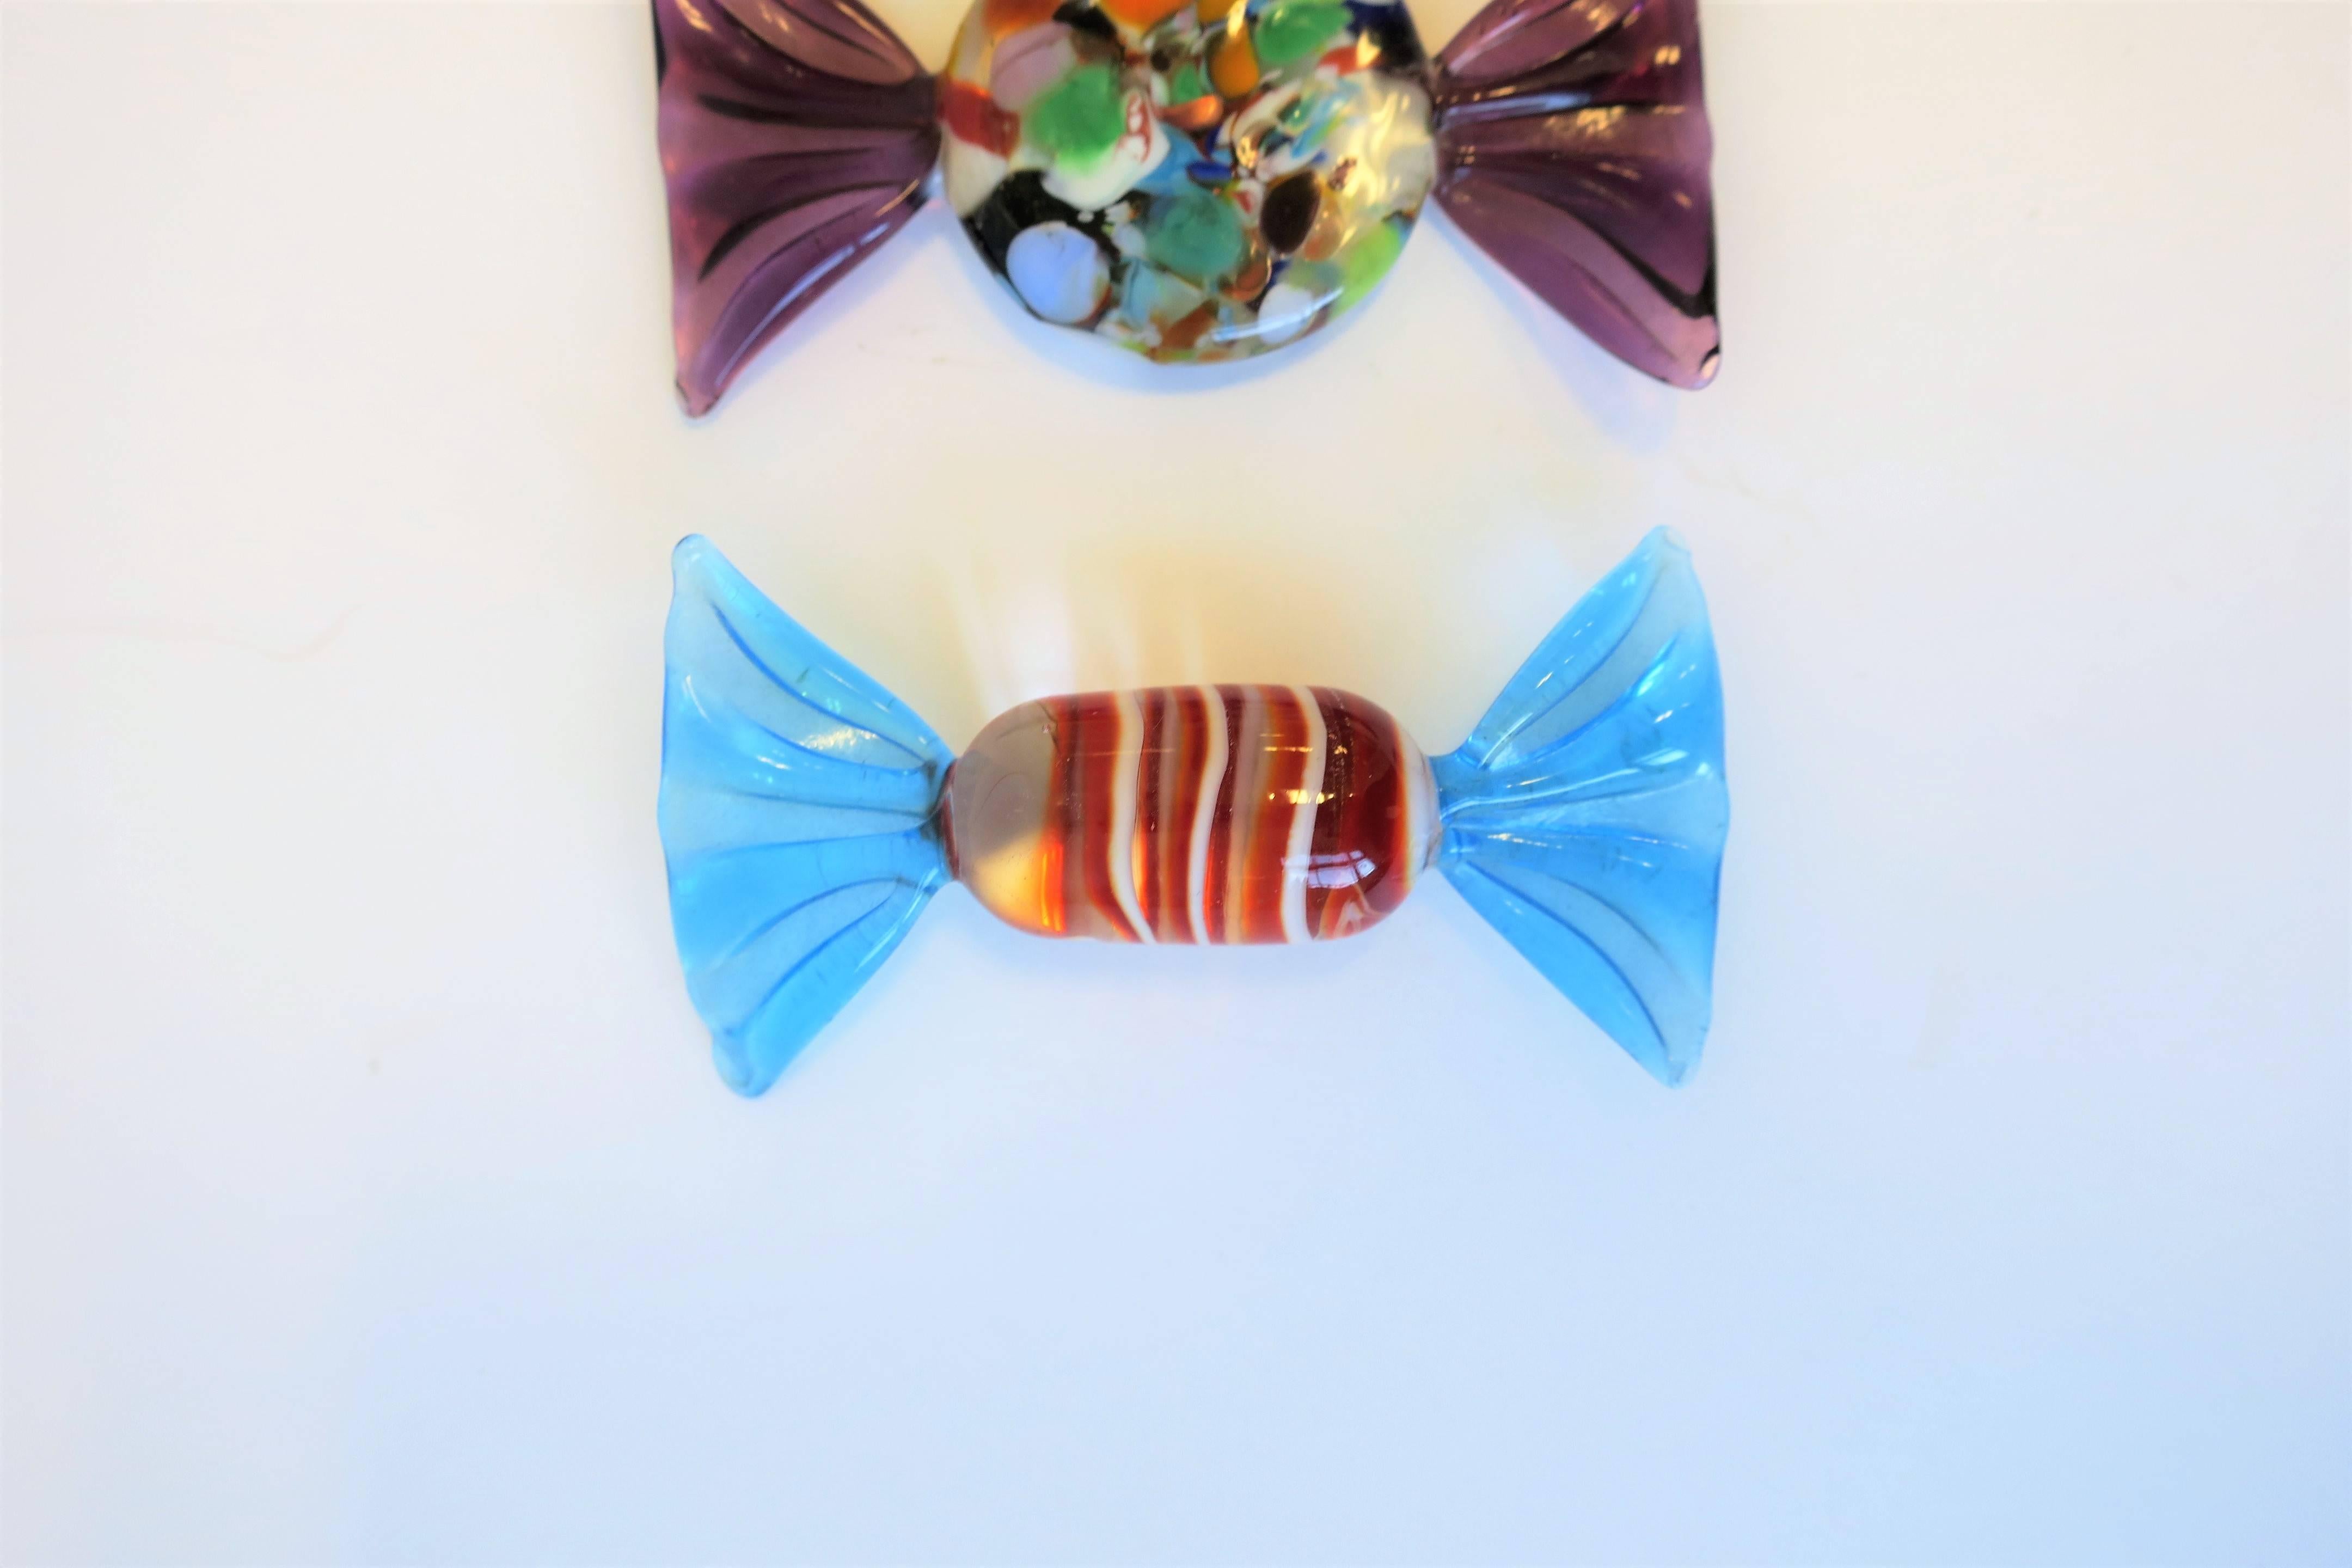 20th Century Italian Murano Art Glass Candy Pieces